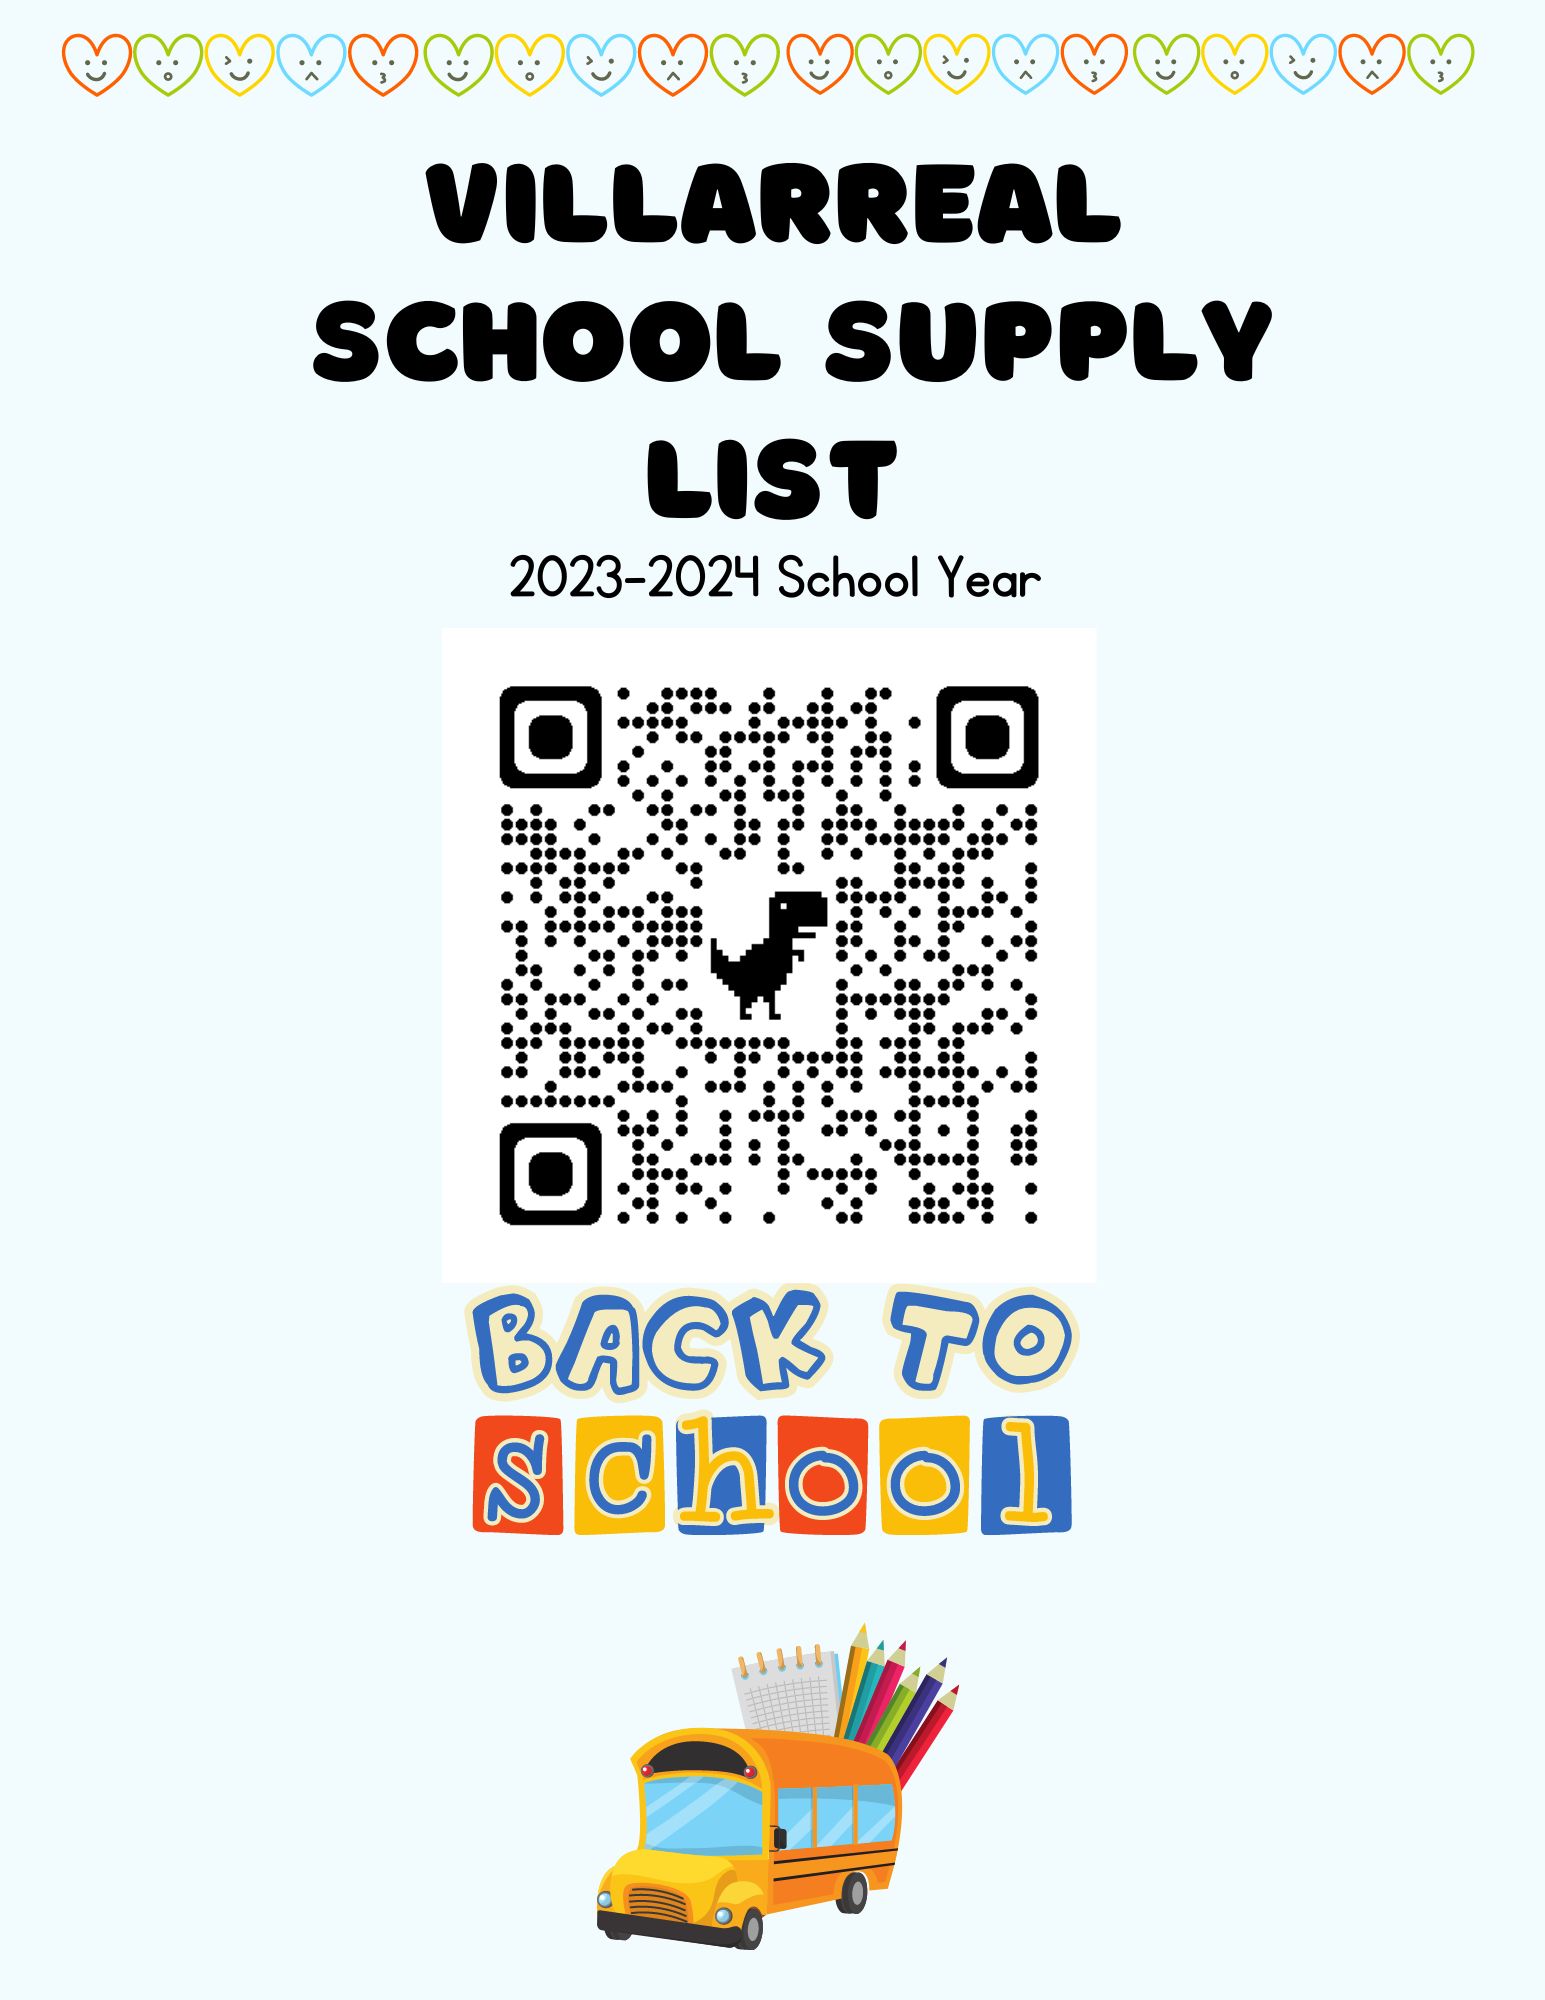 School supply list